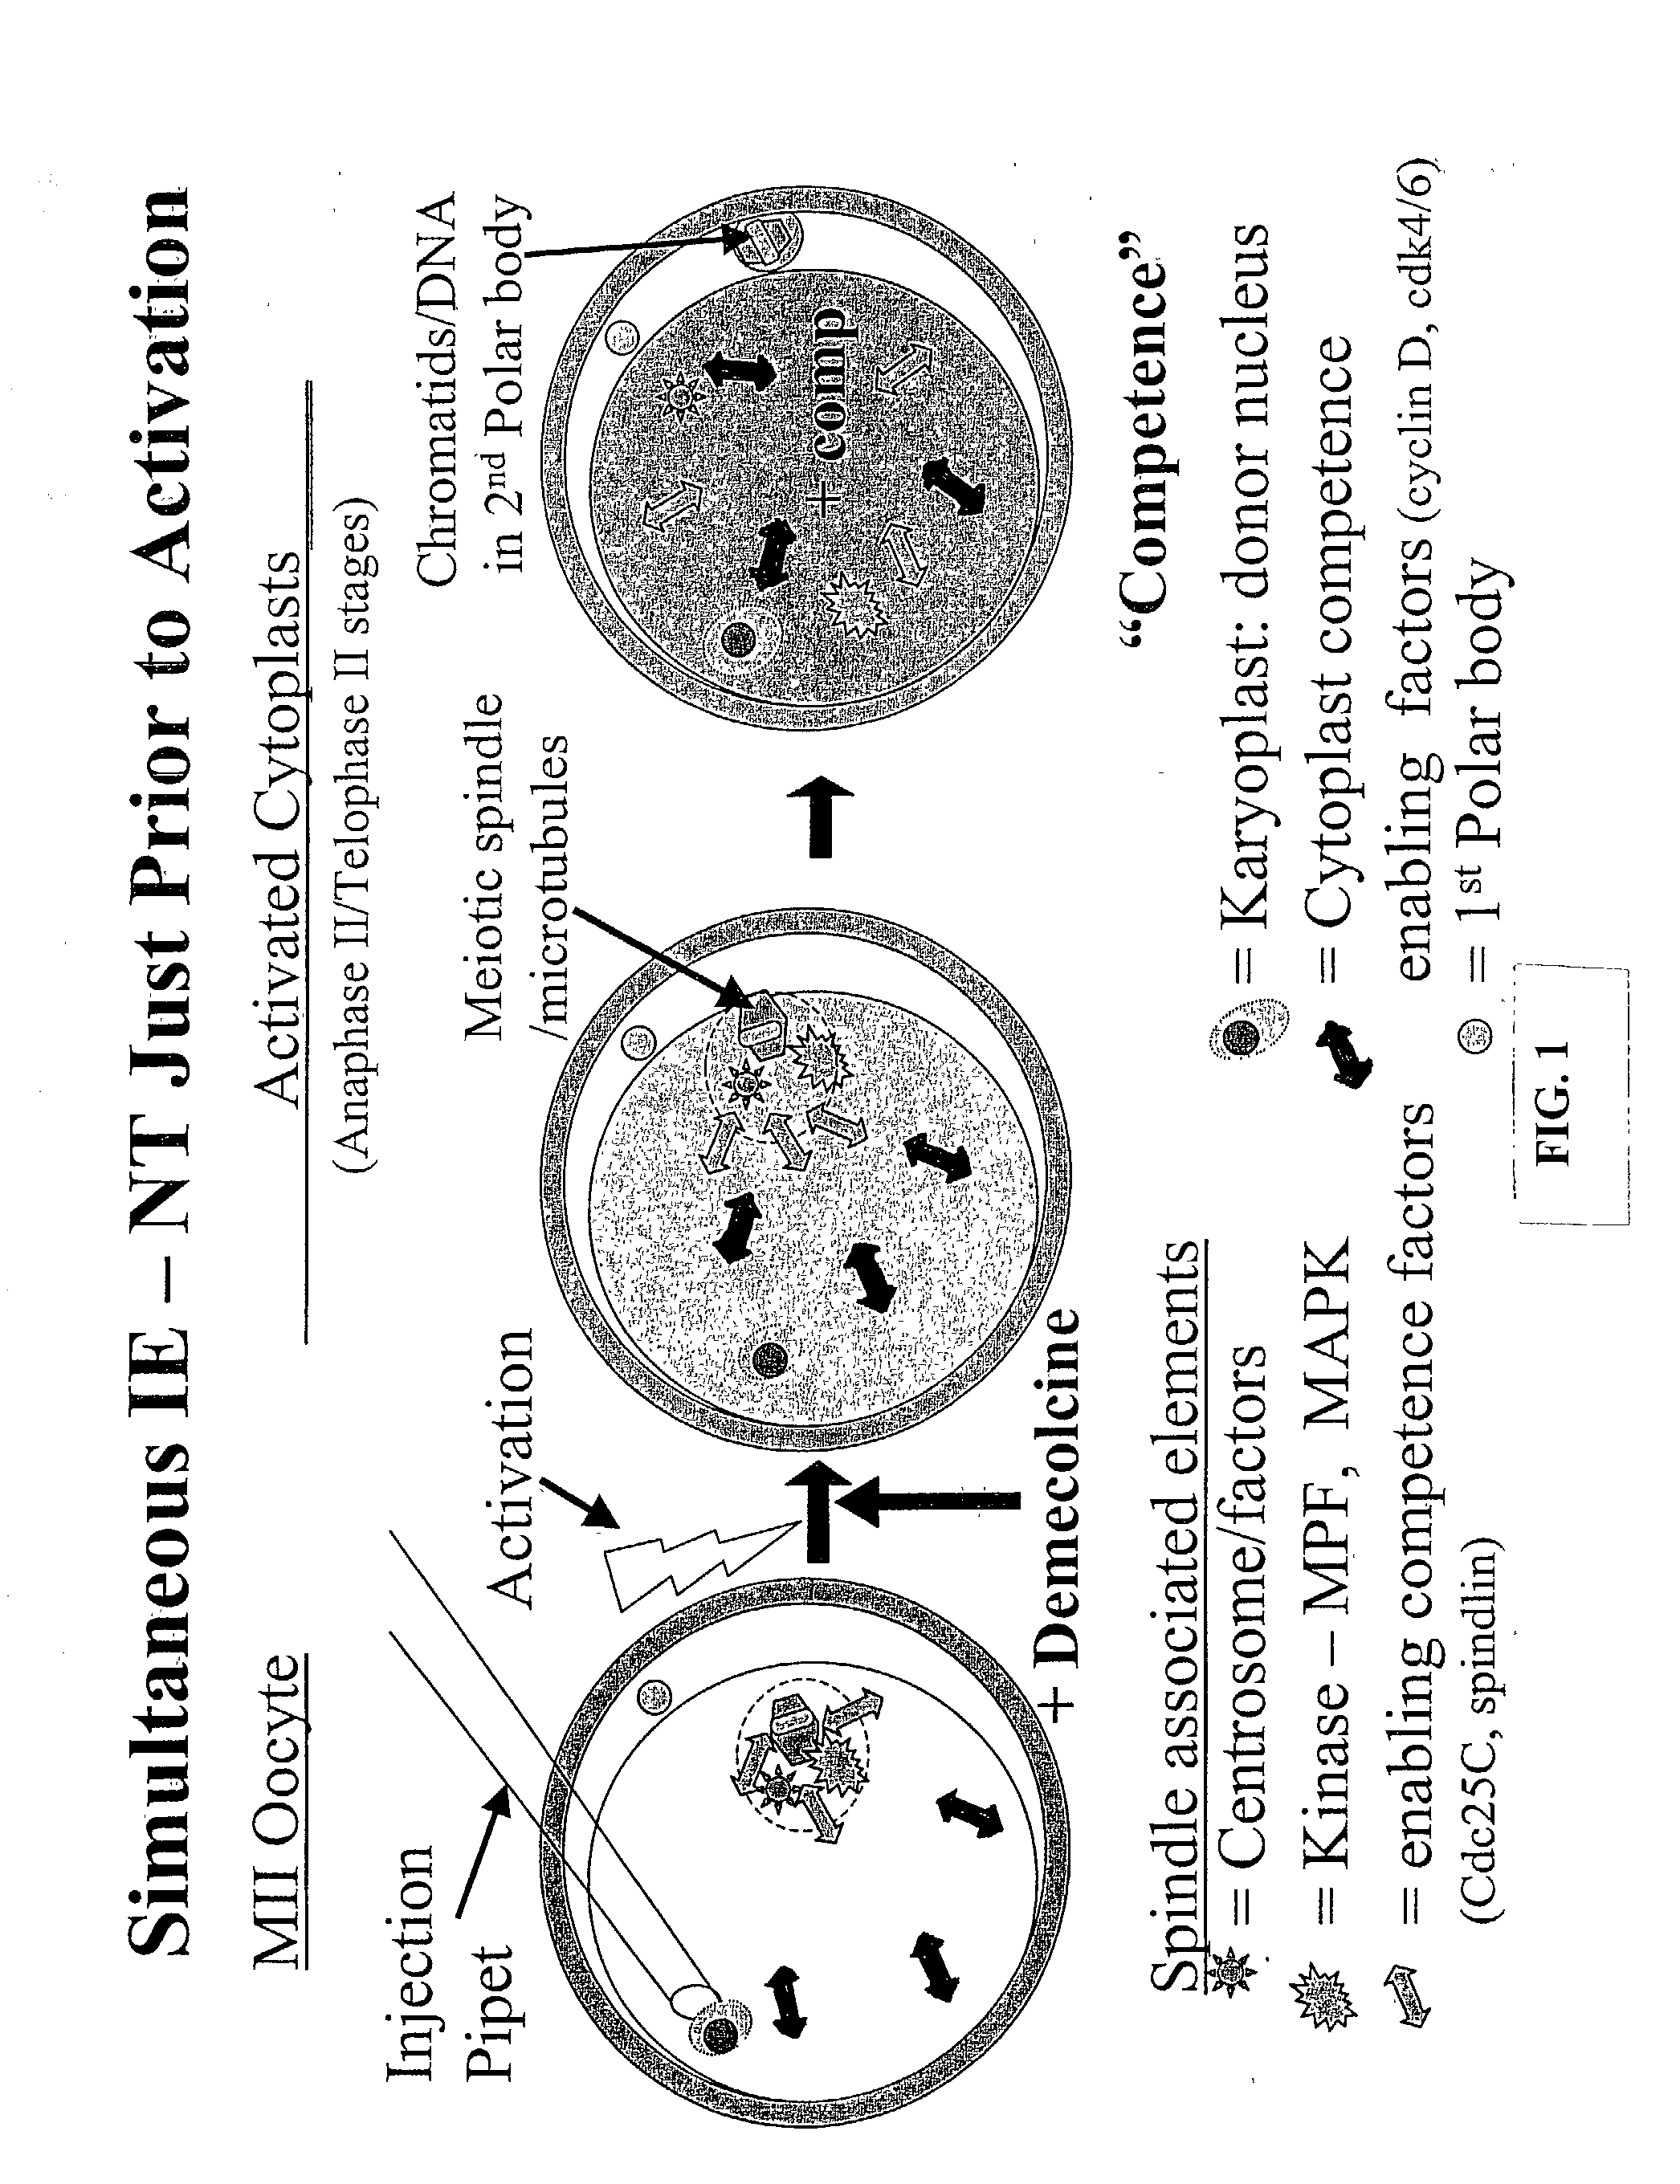 Nuclear transfer embryo formation method